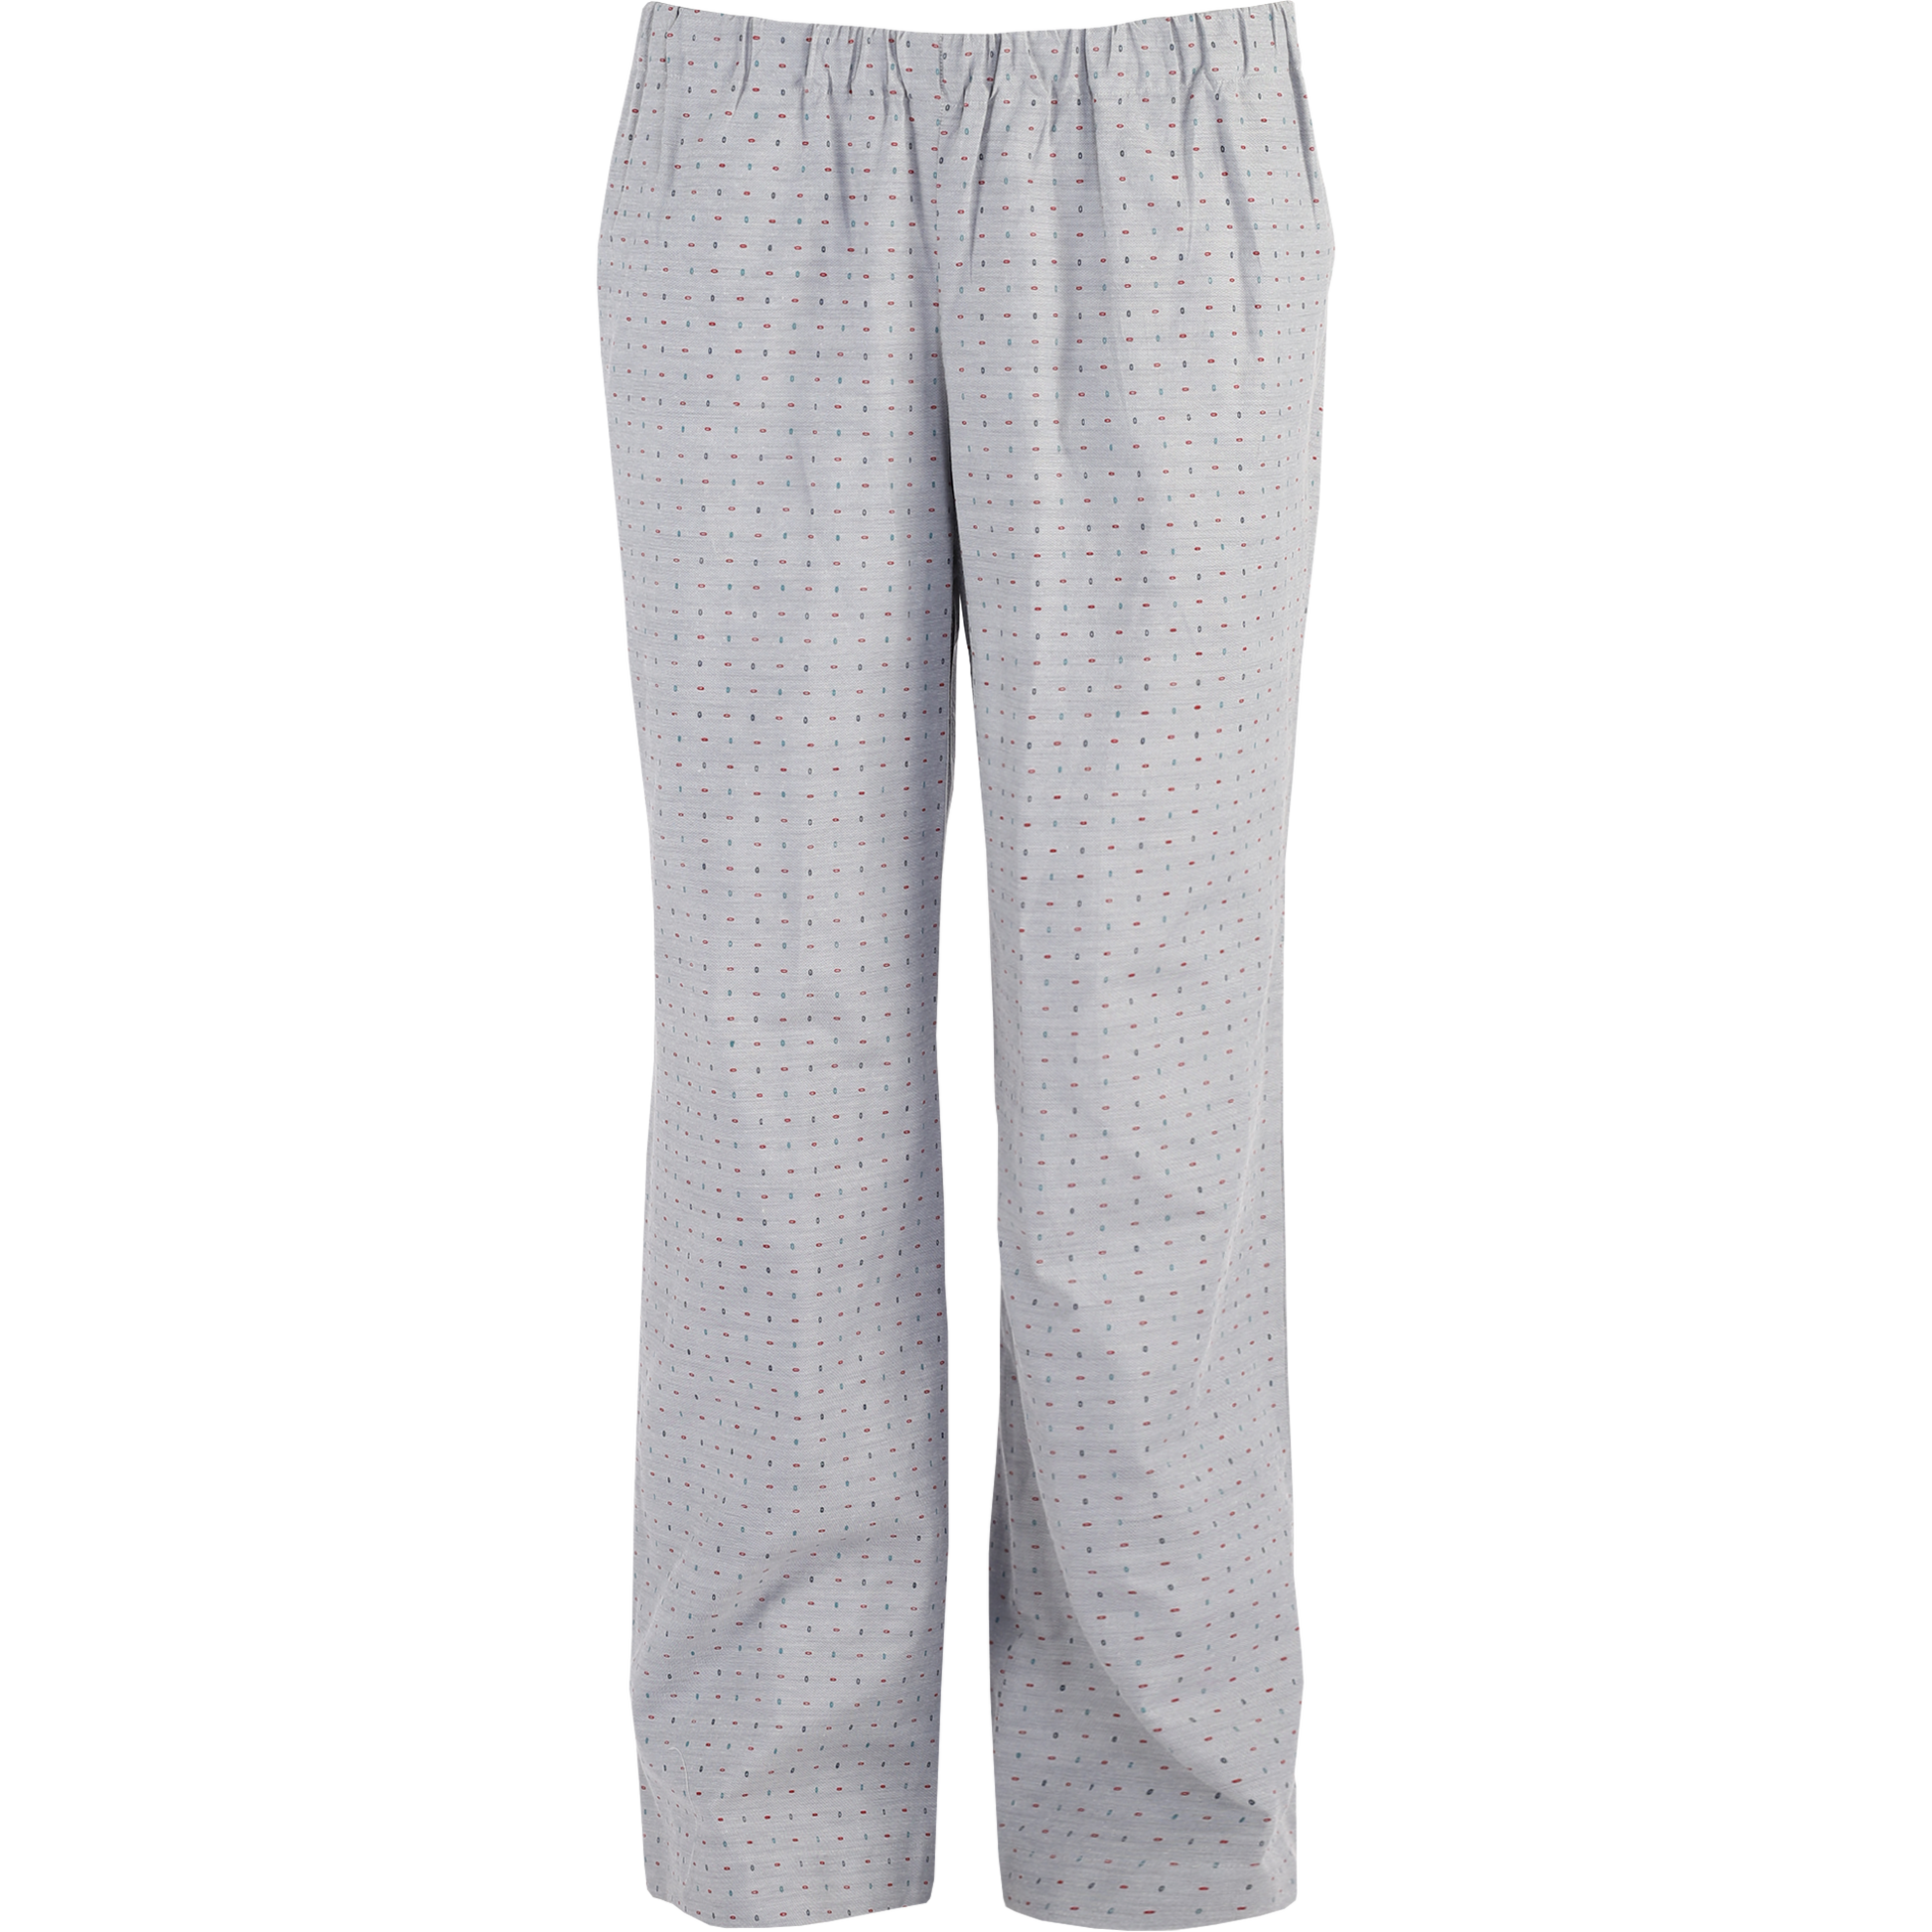 Grey Inpatient Pyjama Pants — Hospital & Nursing Home uniforms by CYC